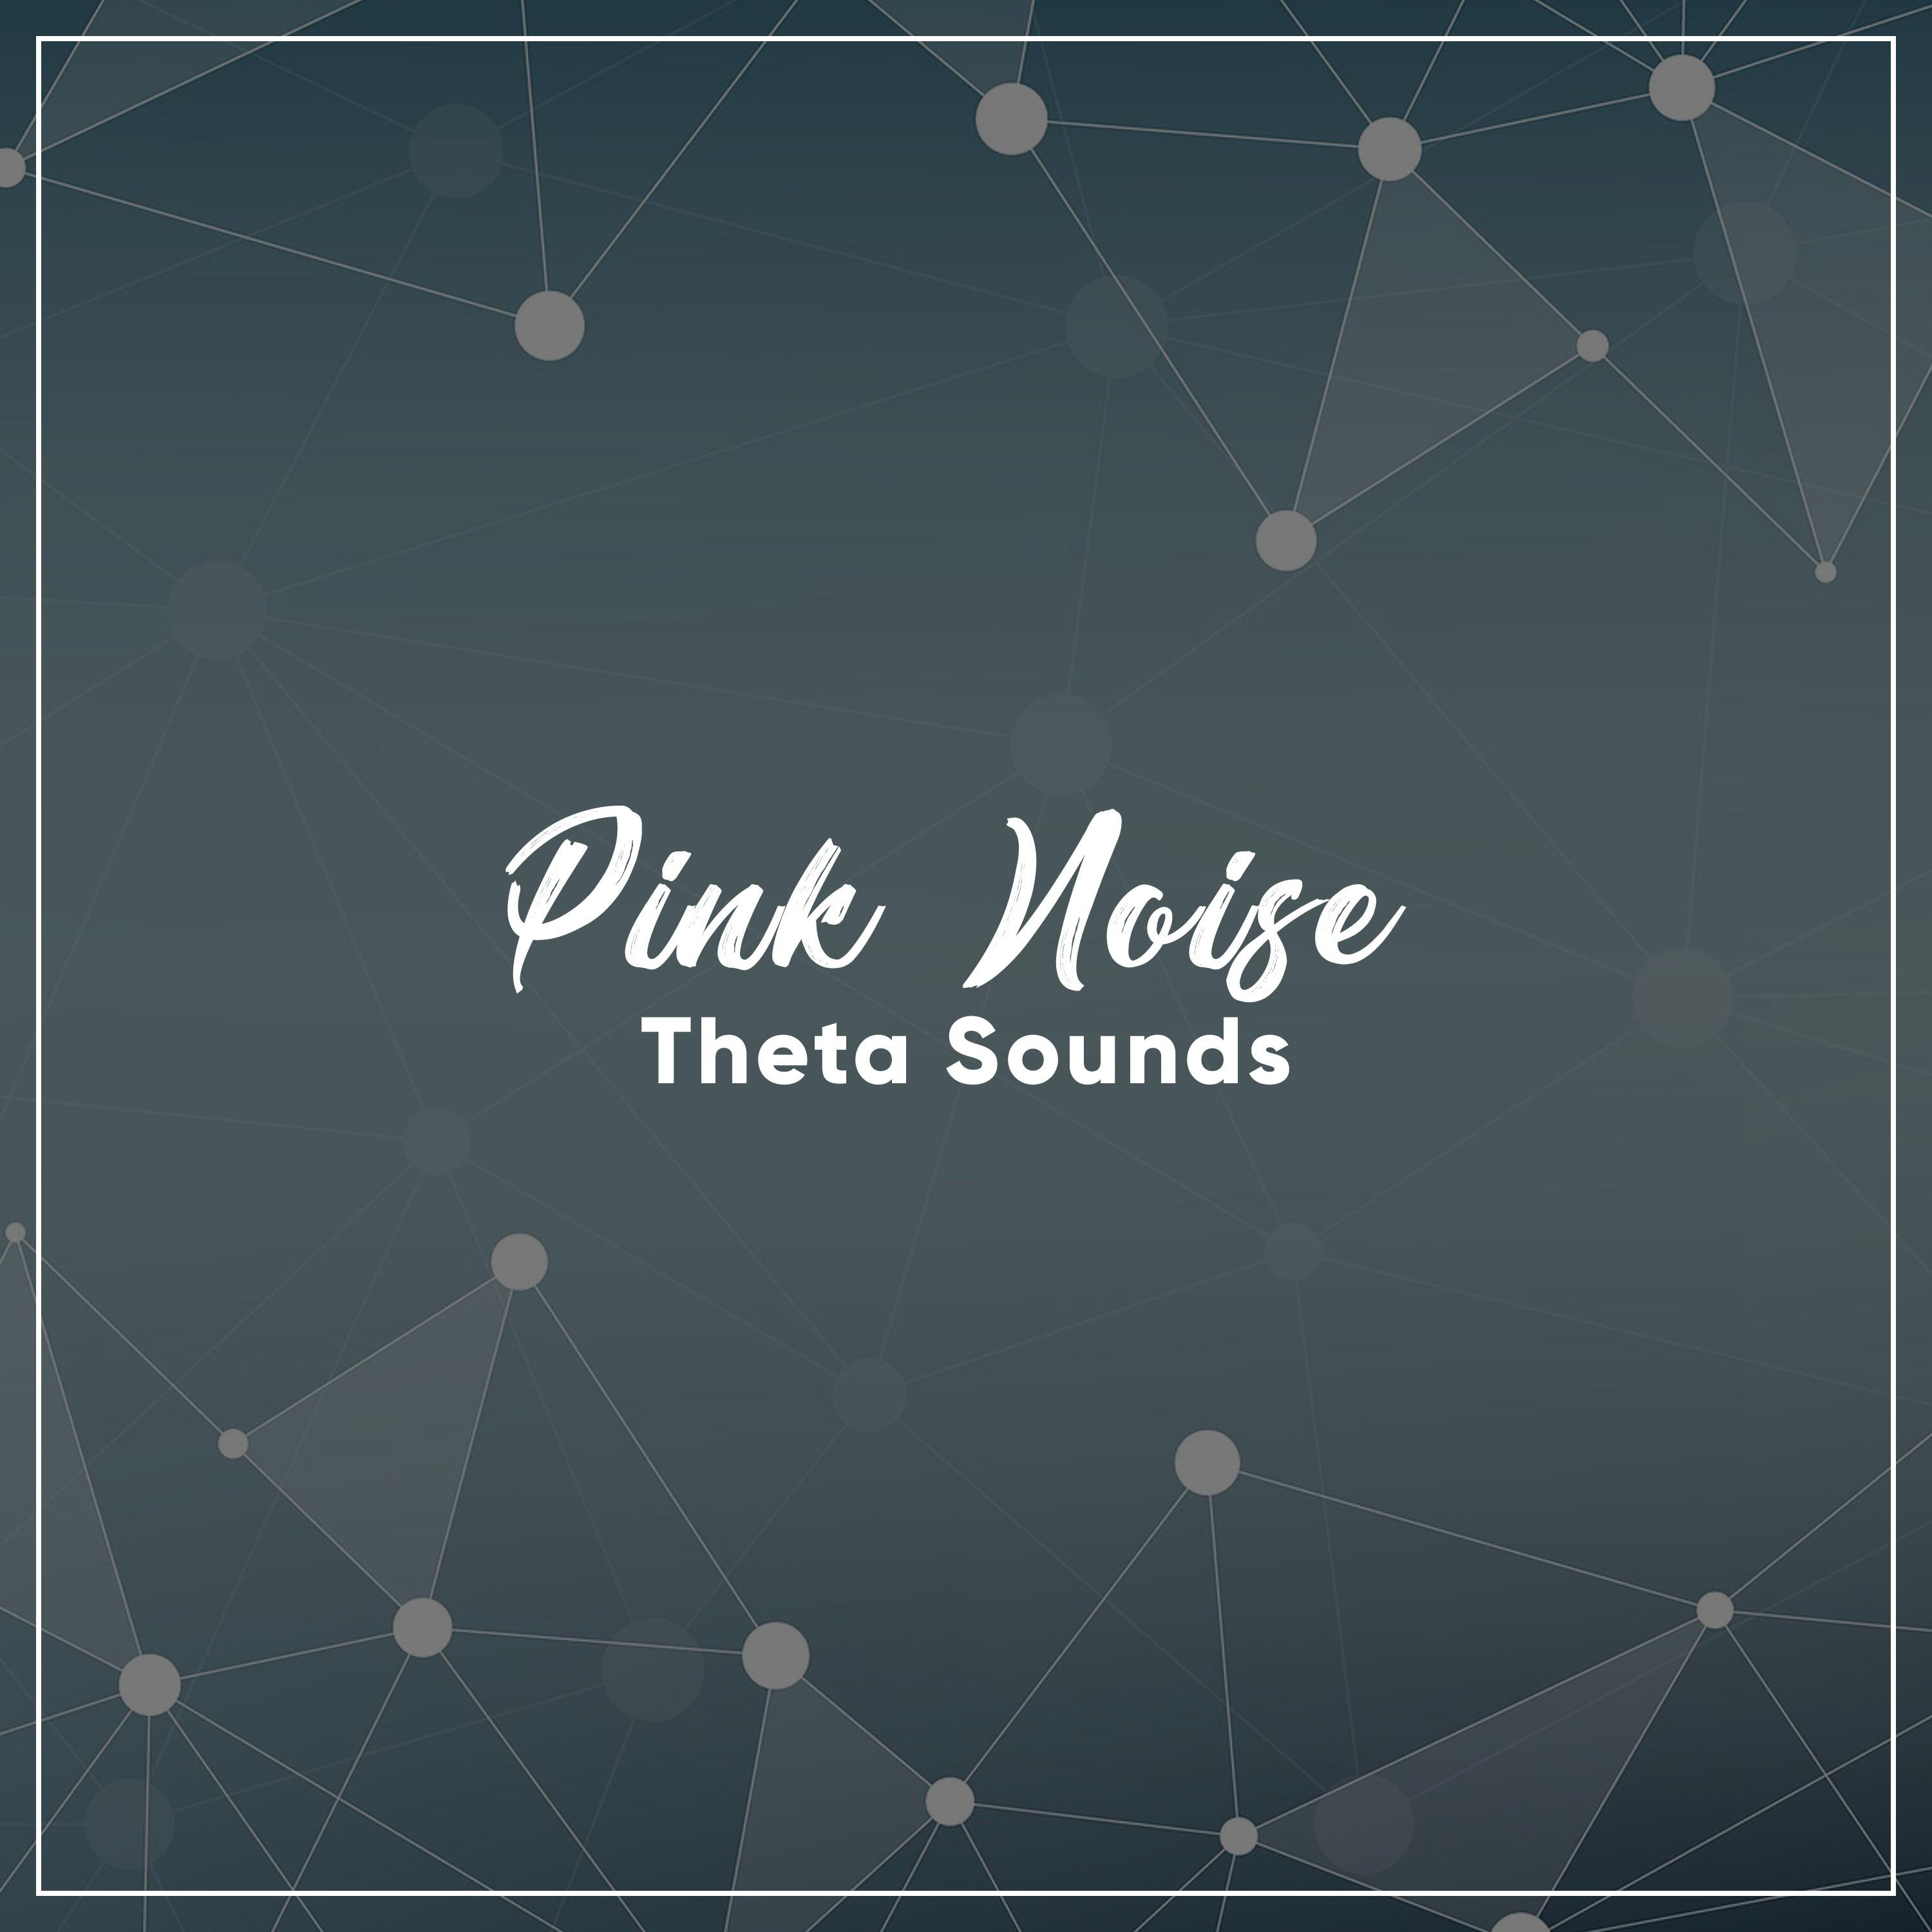 #15 Pink Noise Theta Sounds